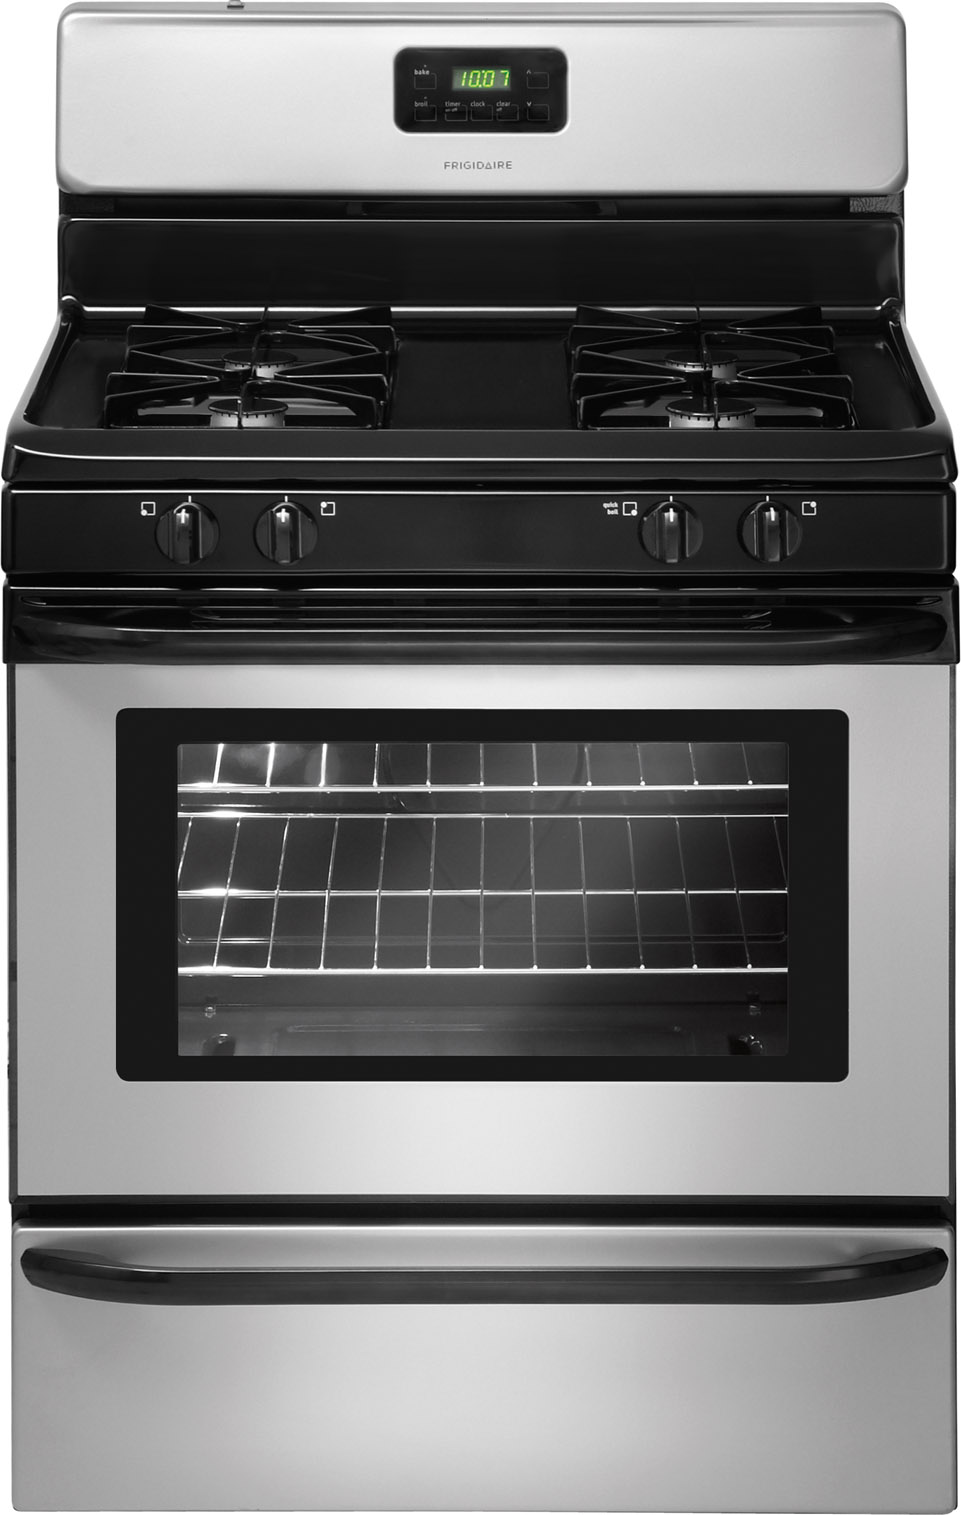 frigidaire-range-stove-oven-model-ffgf3015lmd-parts-repair-help